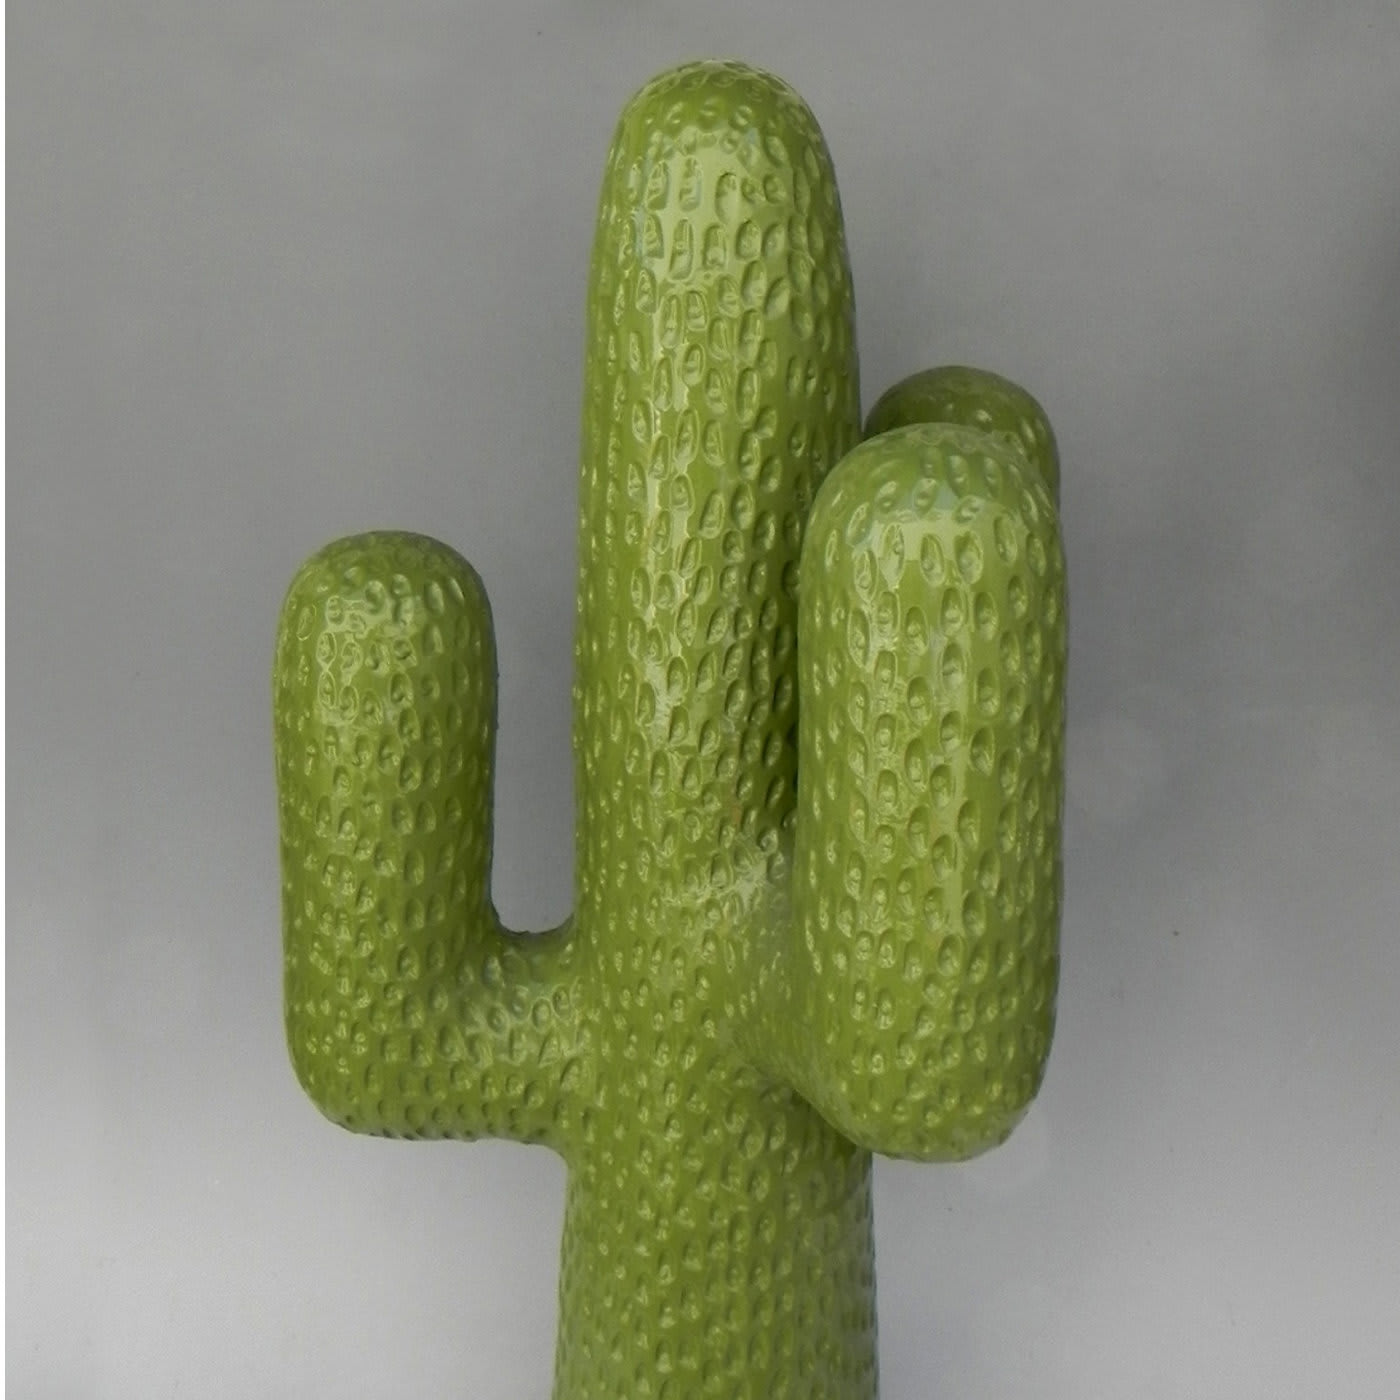 Texas City Ceramic Cactus Sculpture by Tullio Mazzotti - Mazzotti 1903